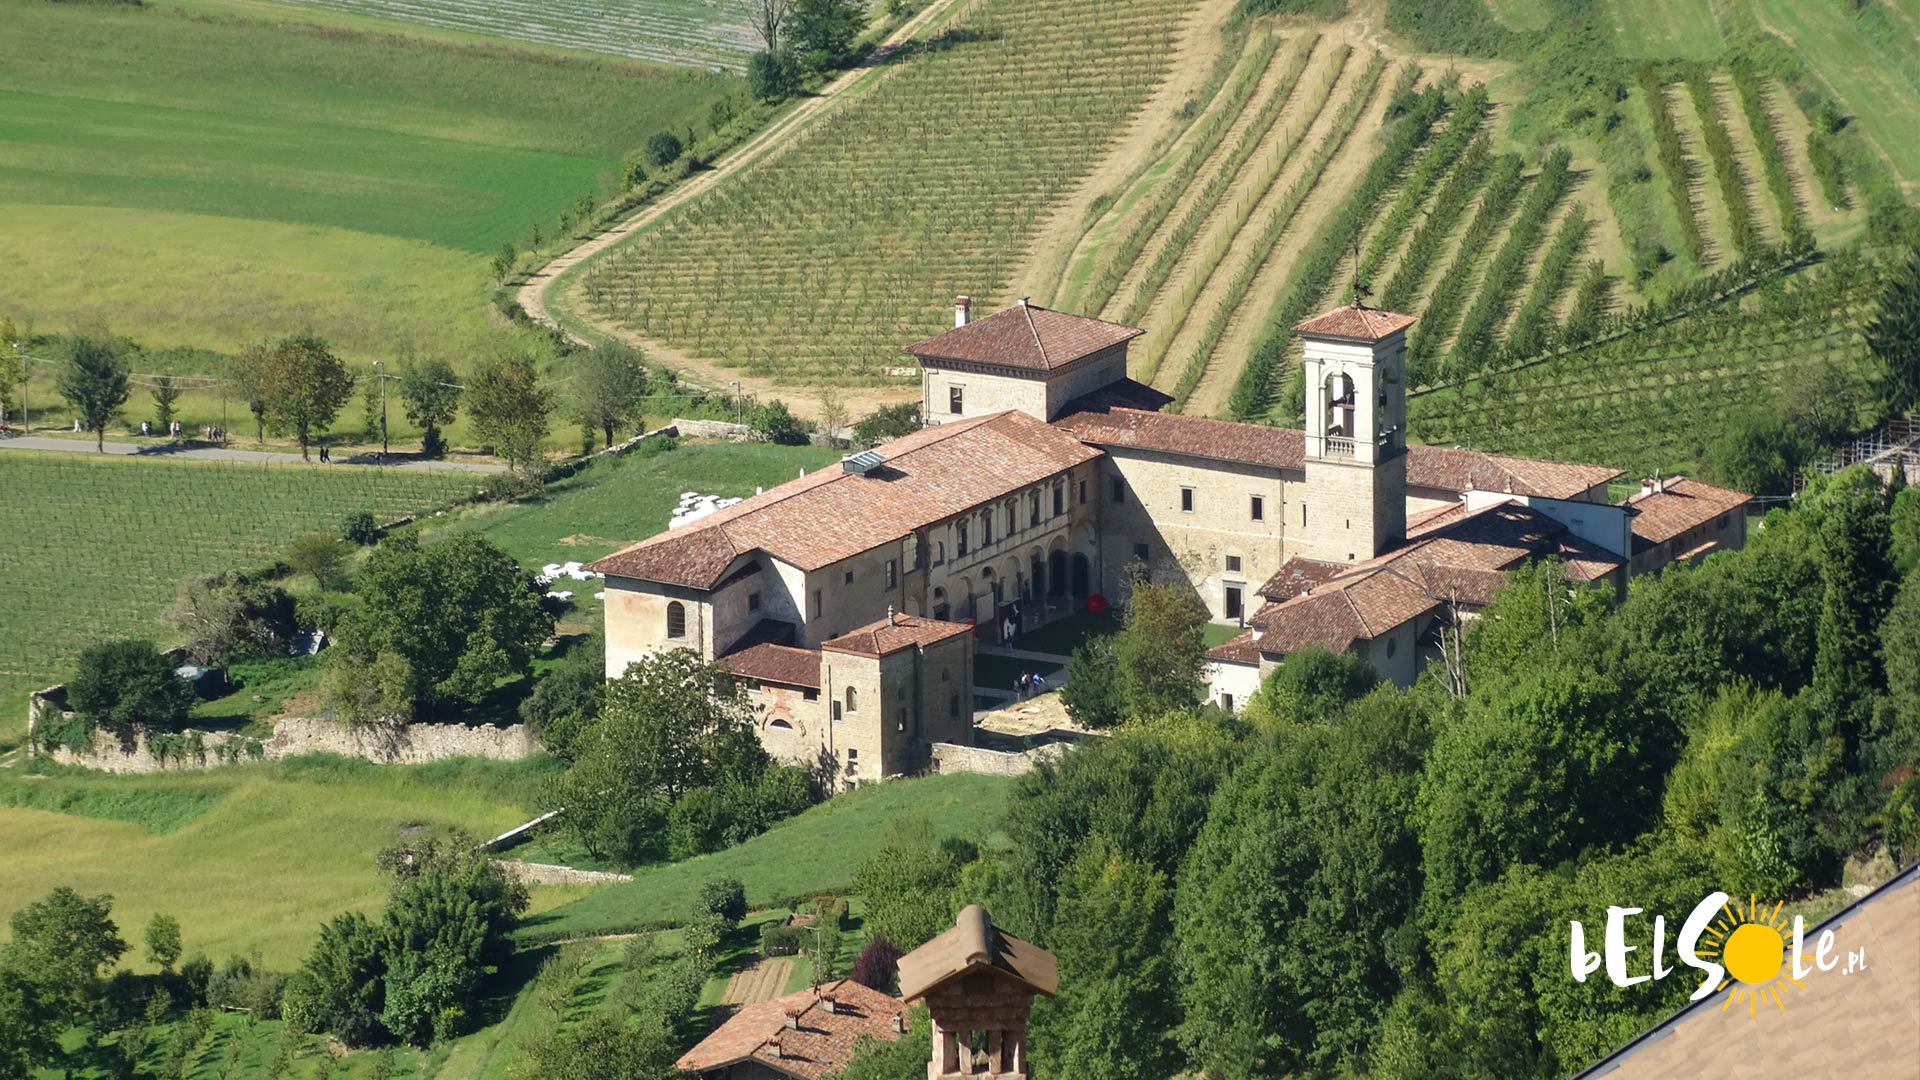 Monastero d'astino Bergamo